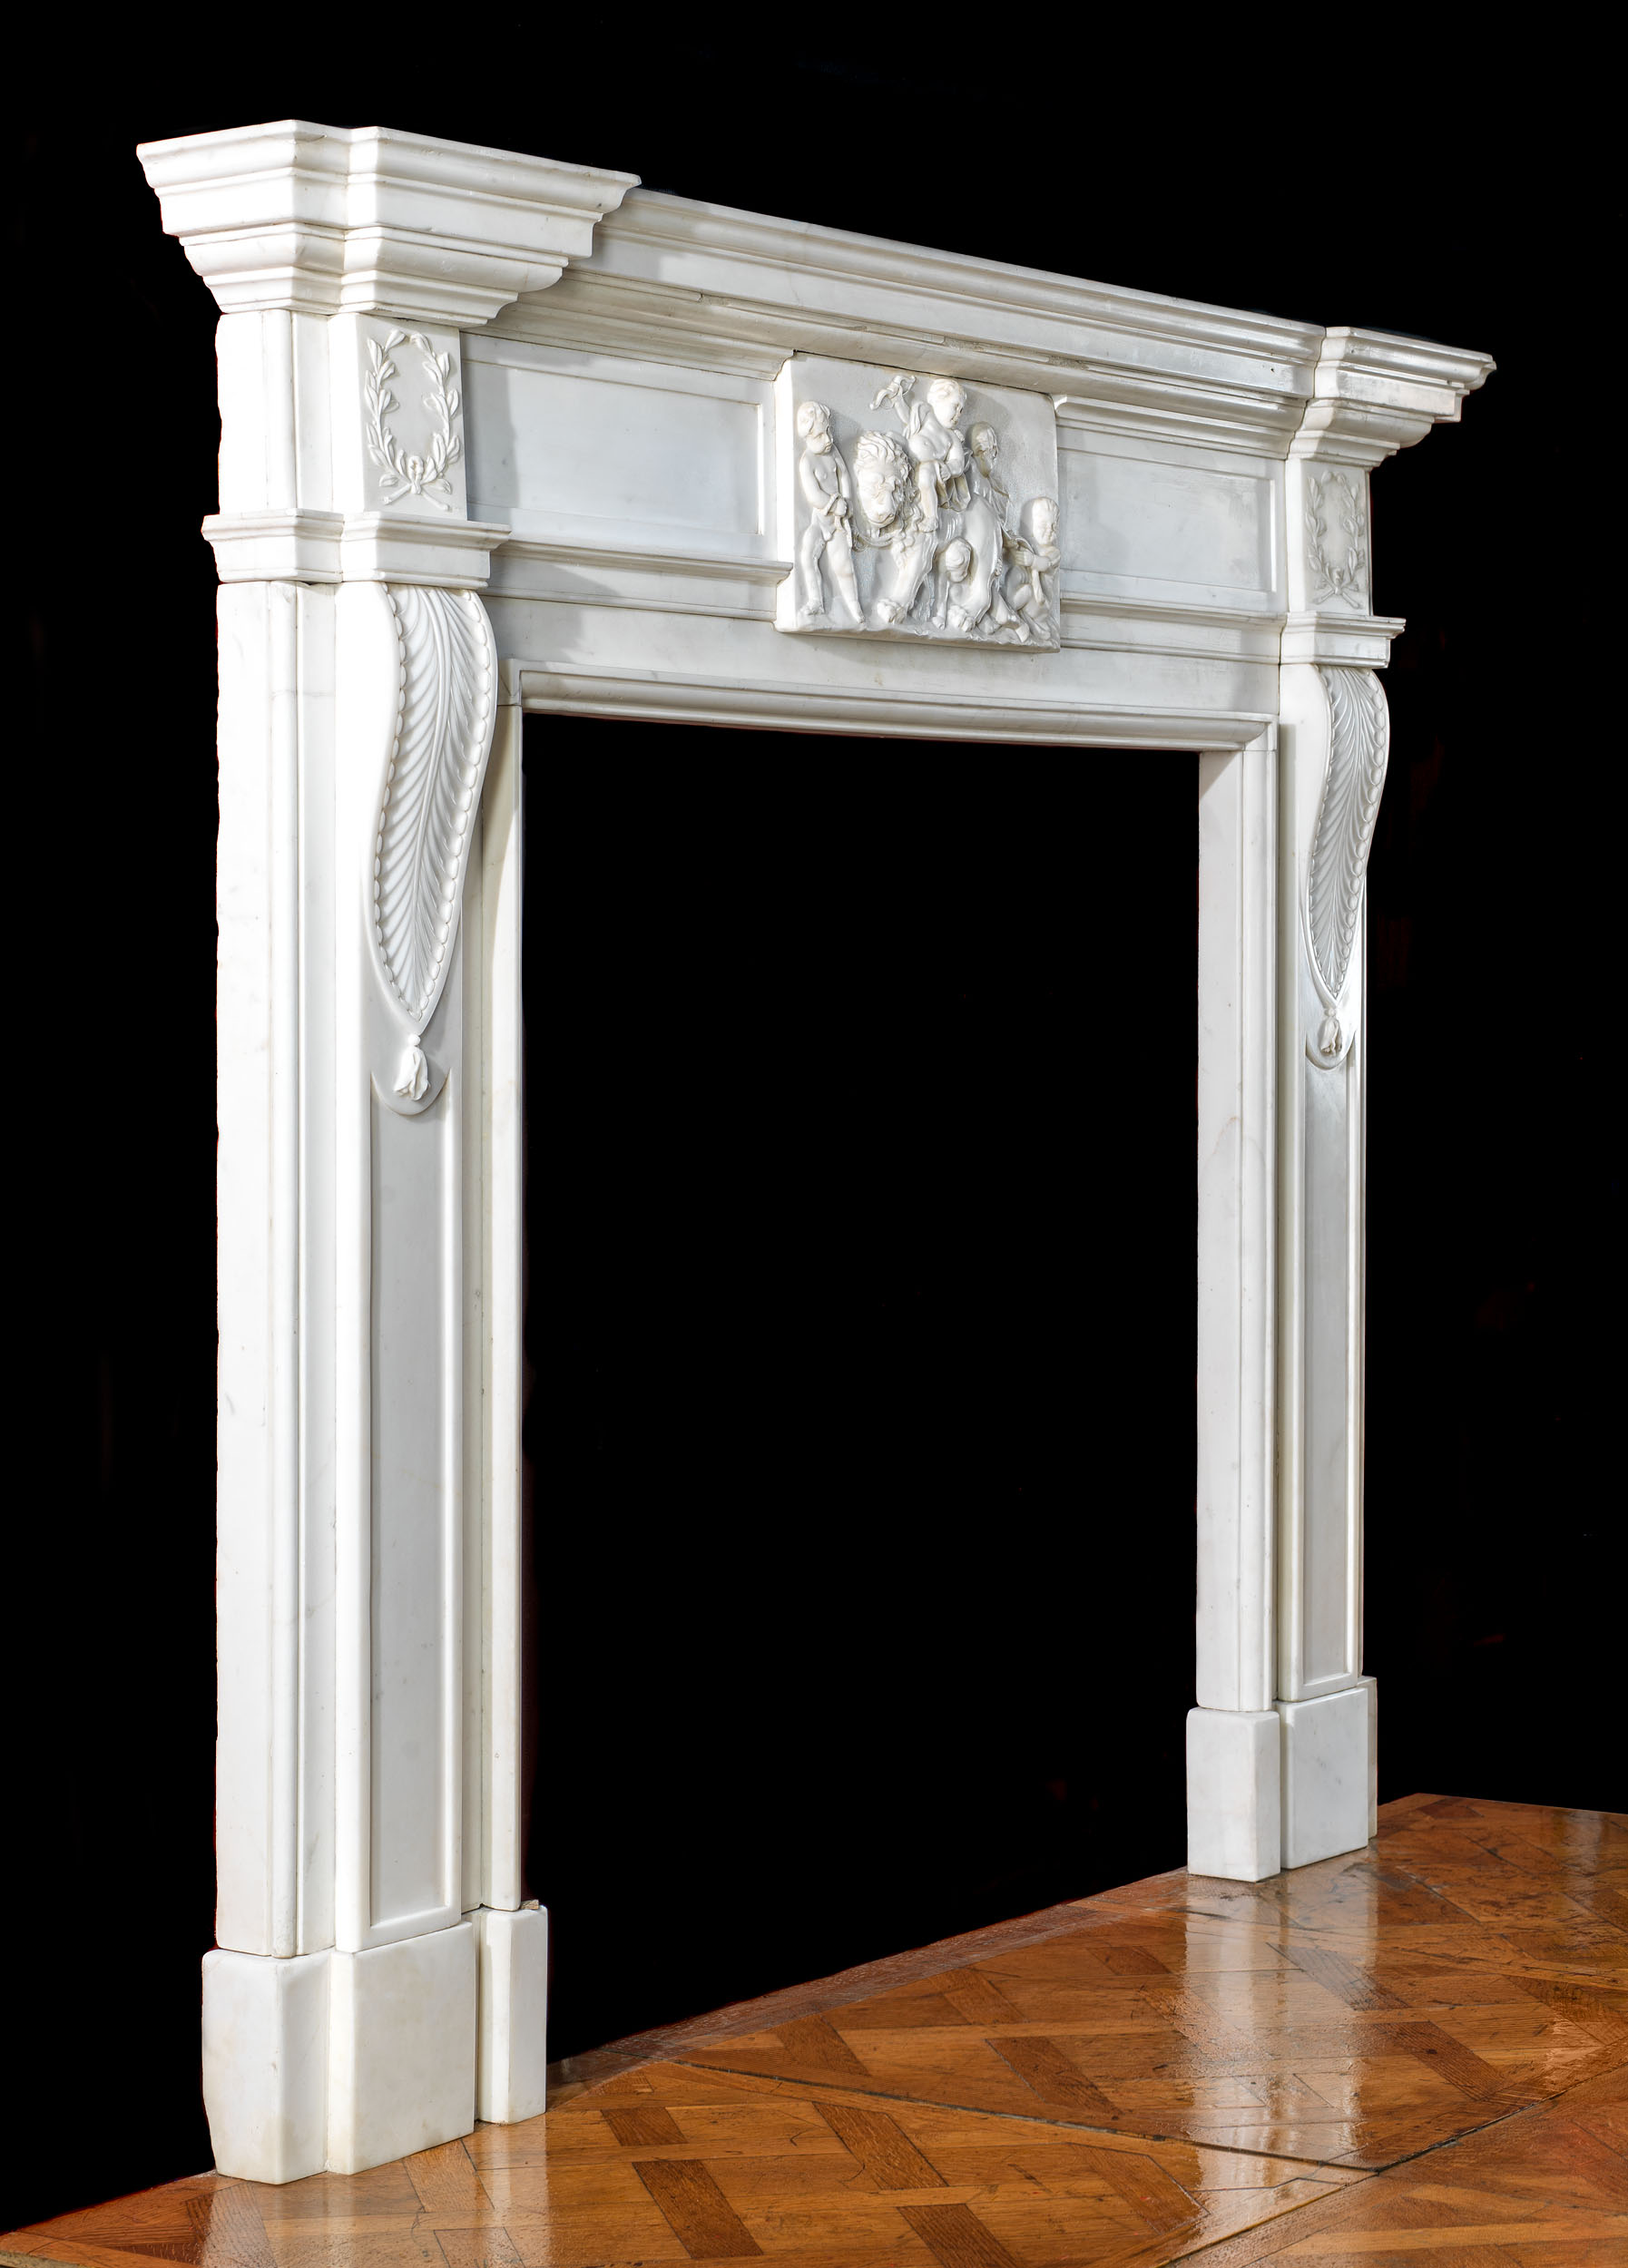 A Fine Statuary Marble Georgian Fireplace